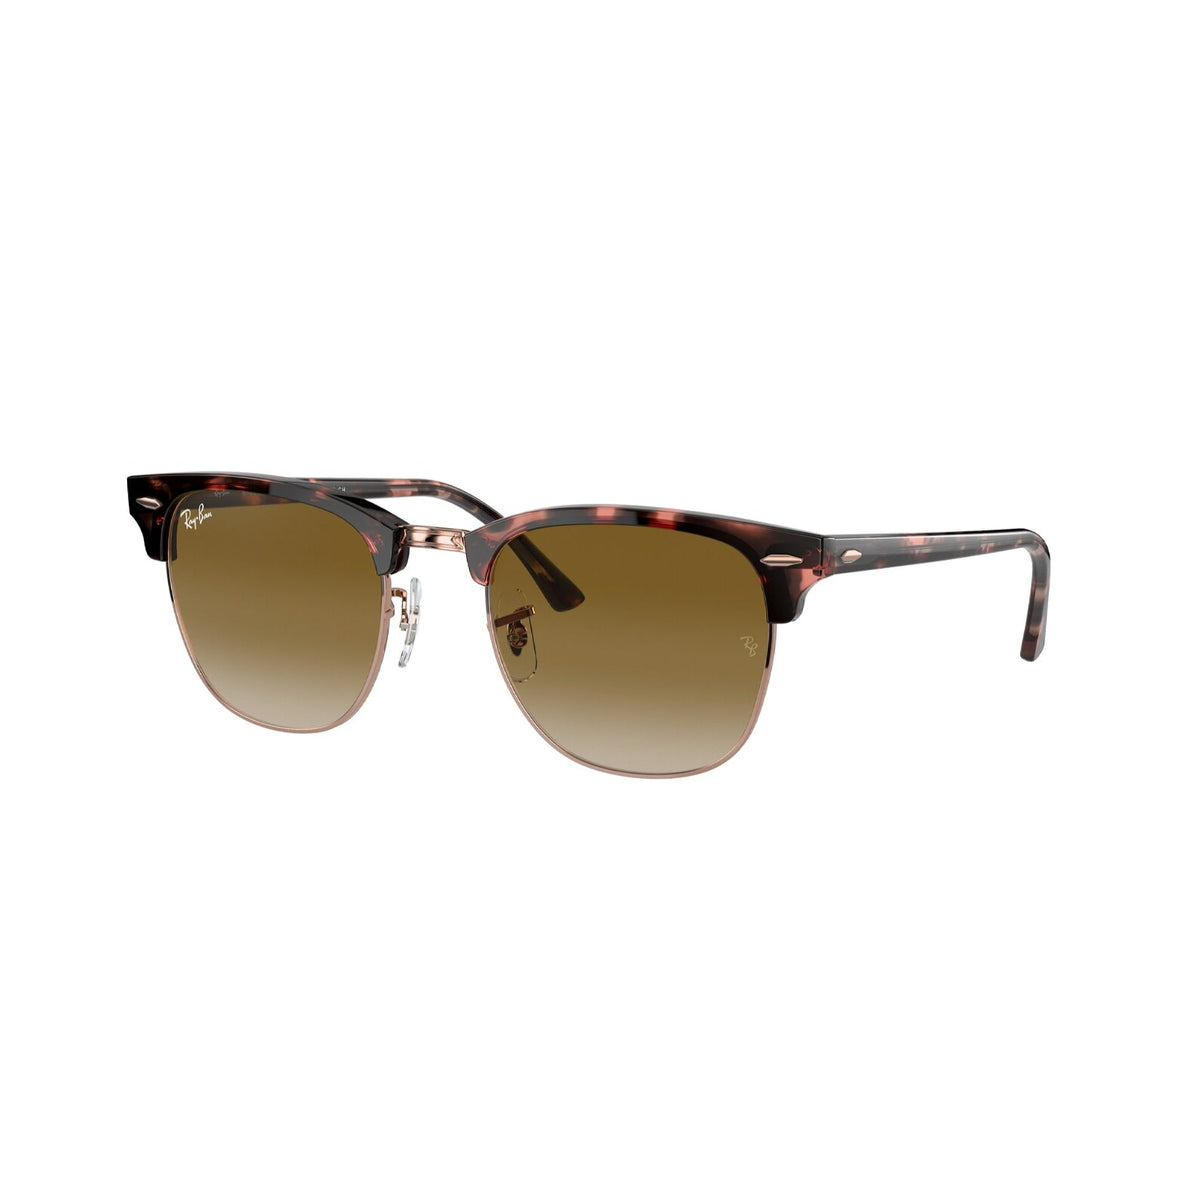 Ray-Ban Unisex Sunglasses Clubmaster Havana Clear Gradient Brown Plastic Plastic  0RB3016 133751 49